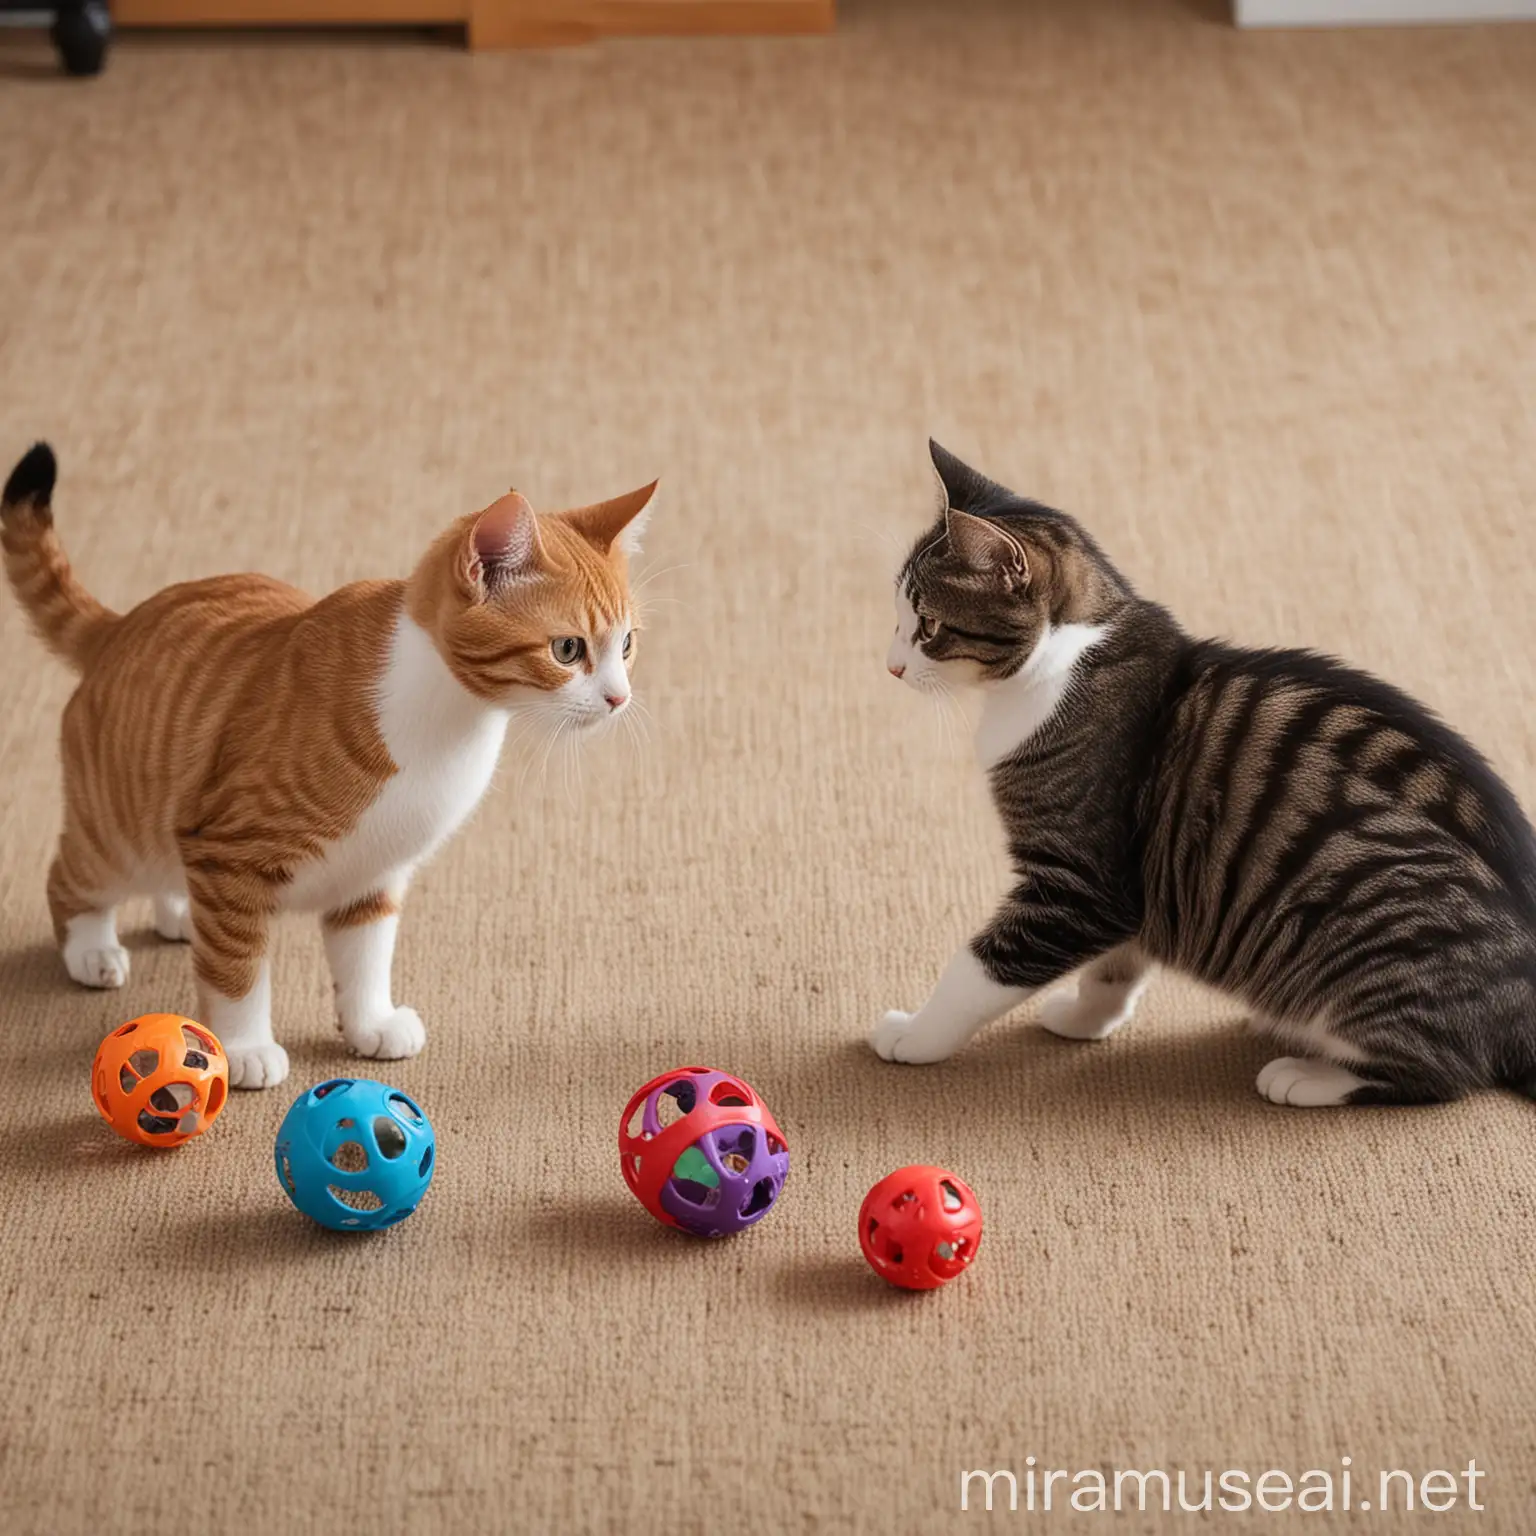 Playful Cats Enjoying Interactive Toys and Exploring Surroundings